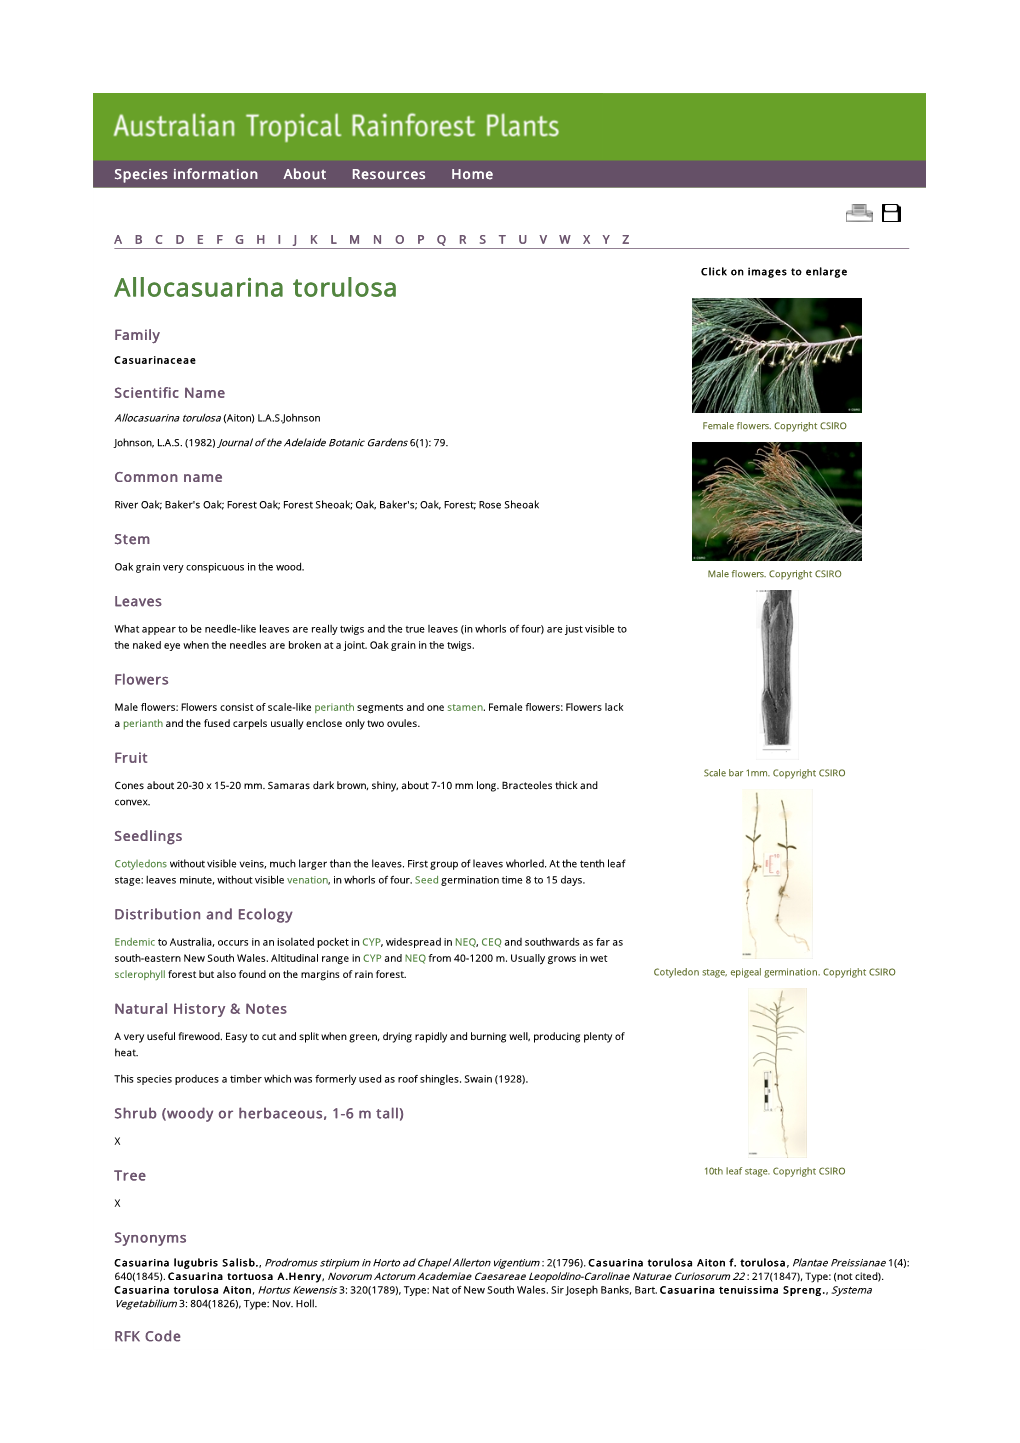 Allocasuarina Torulosa Click on Images to Enlarge